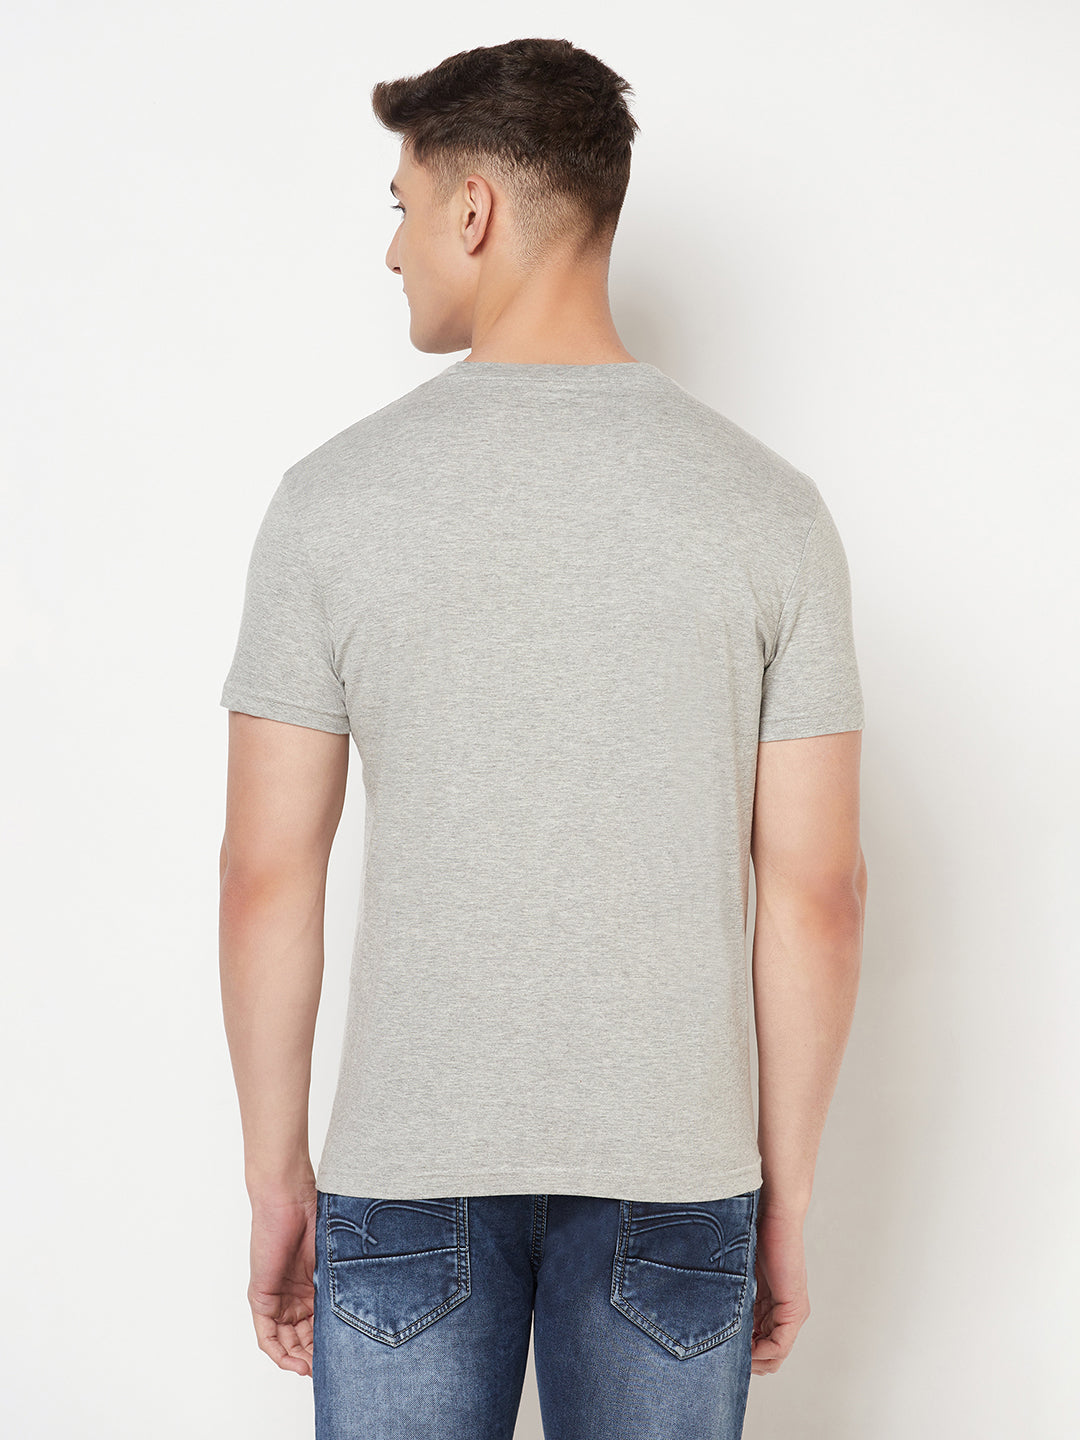 Premium Cotton Tshirts  (Pack of 2- Grey,Maroon)